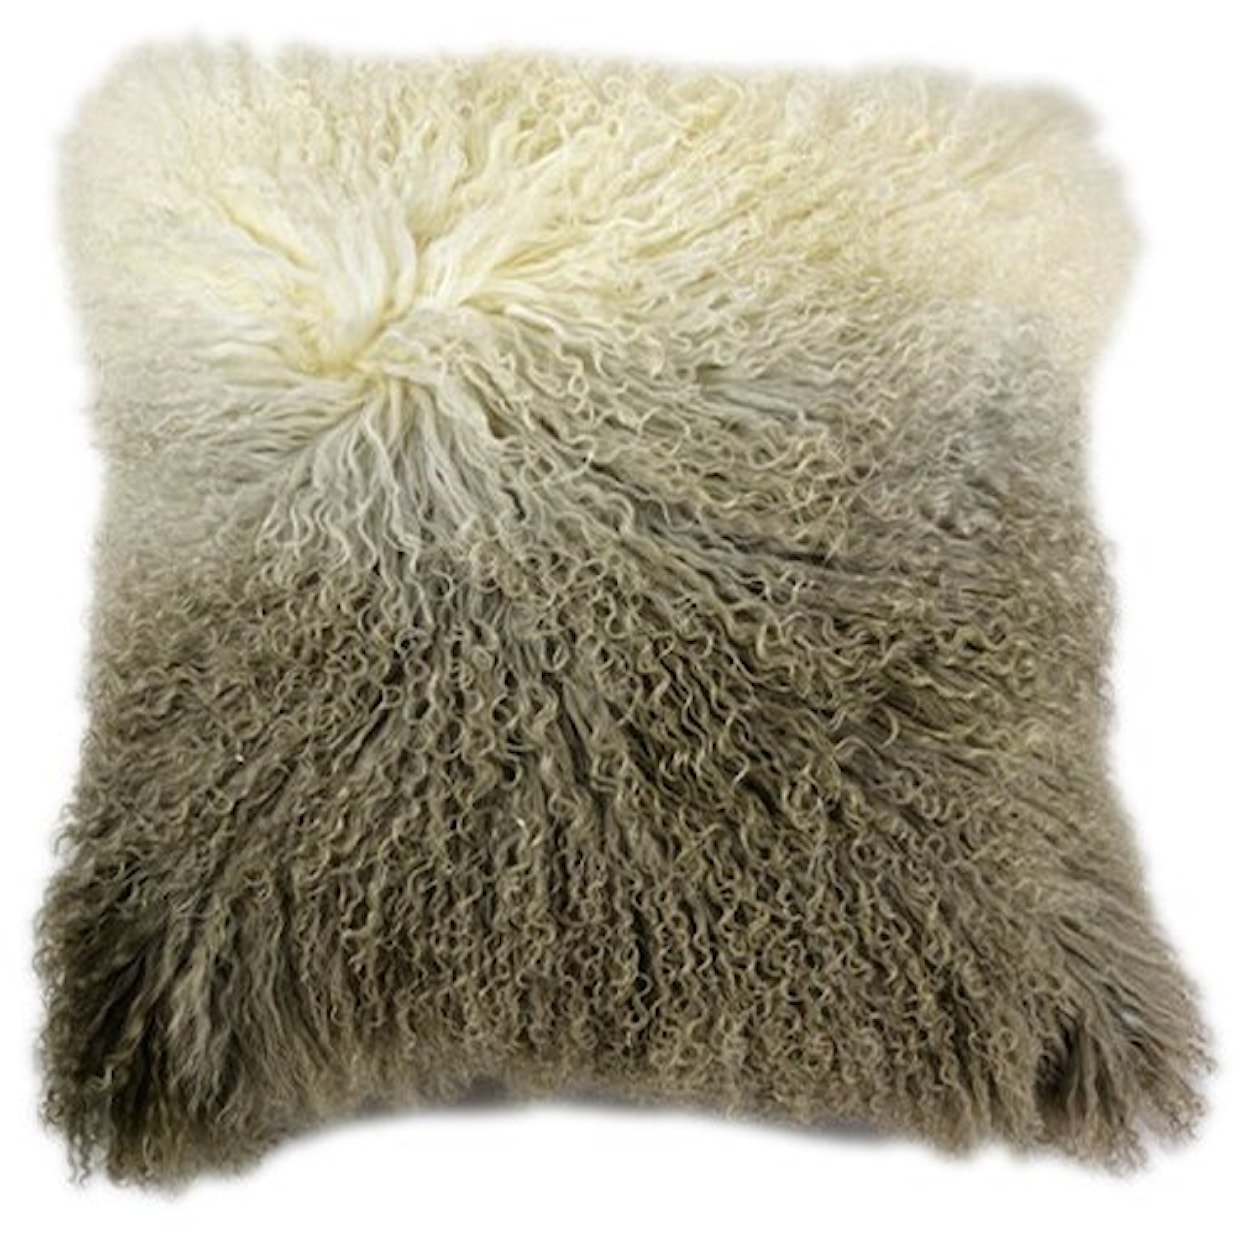 Moe's Home Collection Pillows and Throws Lamb Fur Pillow Light Grey Spectrum